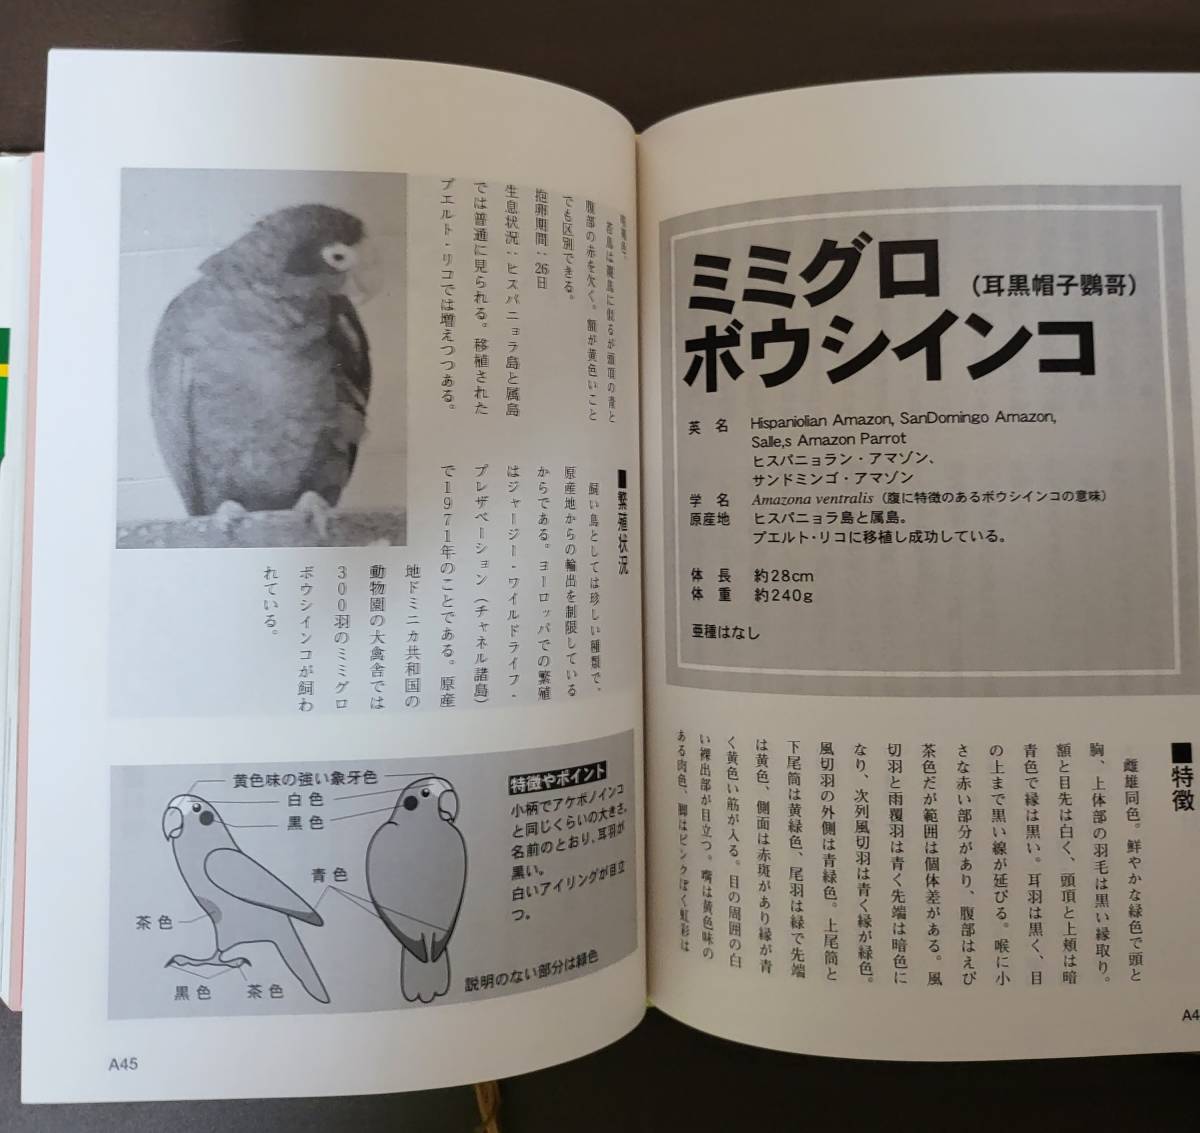  large parakeet. book@1999/10/1. see peace line ( work ) parakeet parrot 